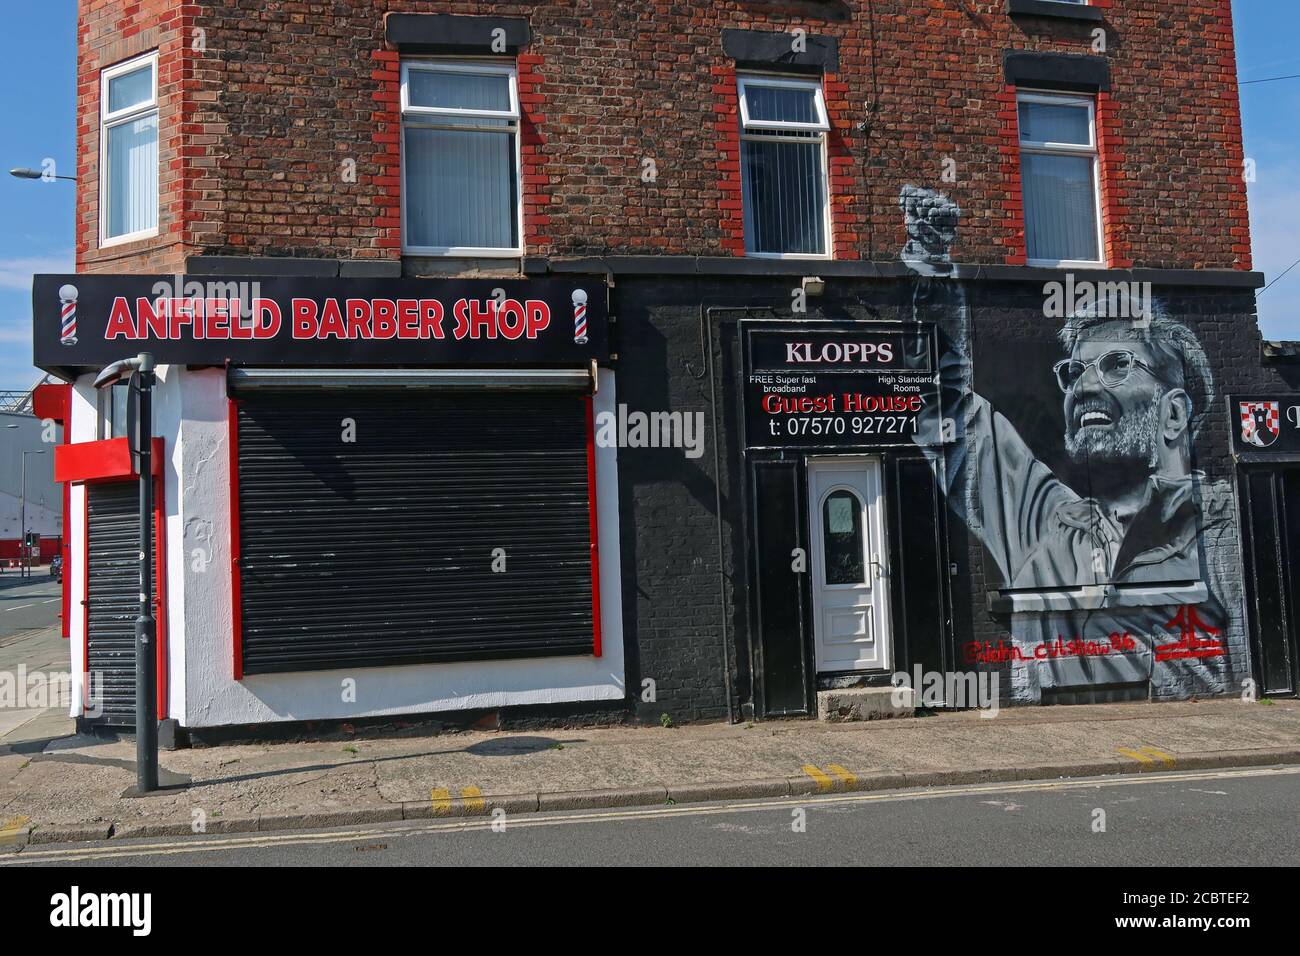 Anfield barber Shop,Klopps B&B, LFC,Liverpool Football Club, Anfield, Premier League, Merseyside,North West England, UK, L4 2UZ Stock Photo